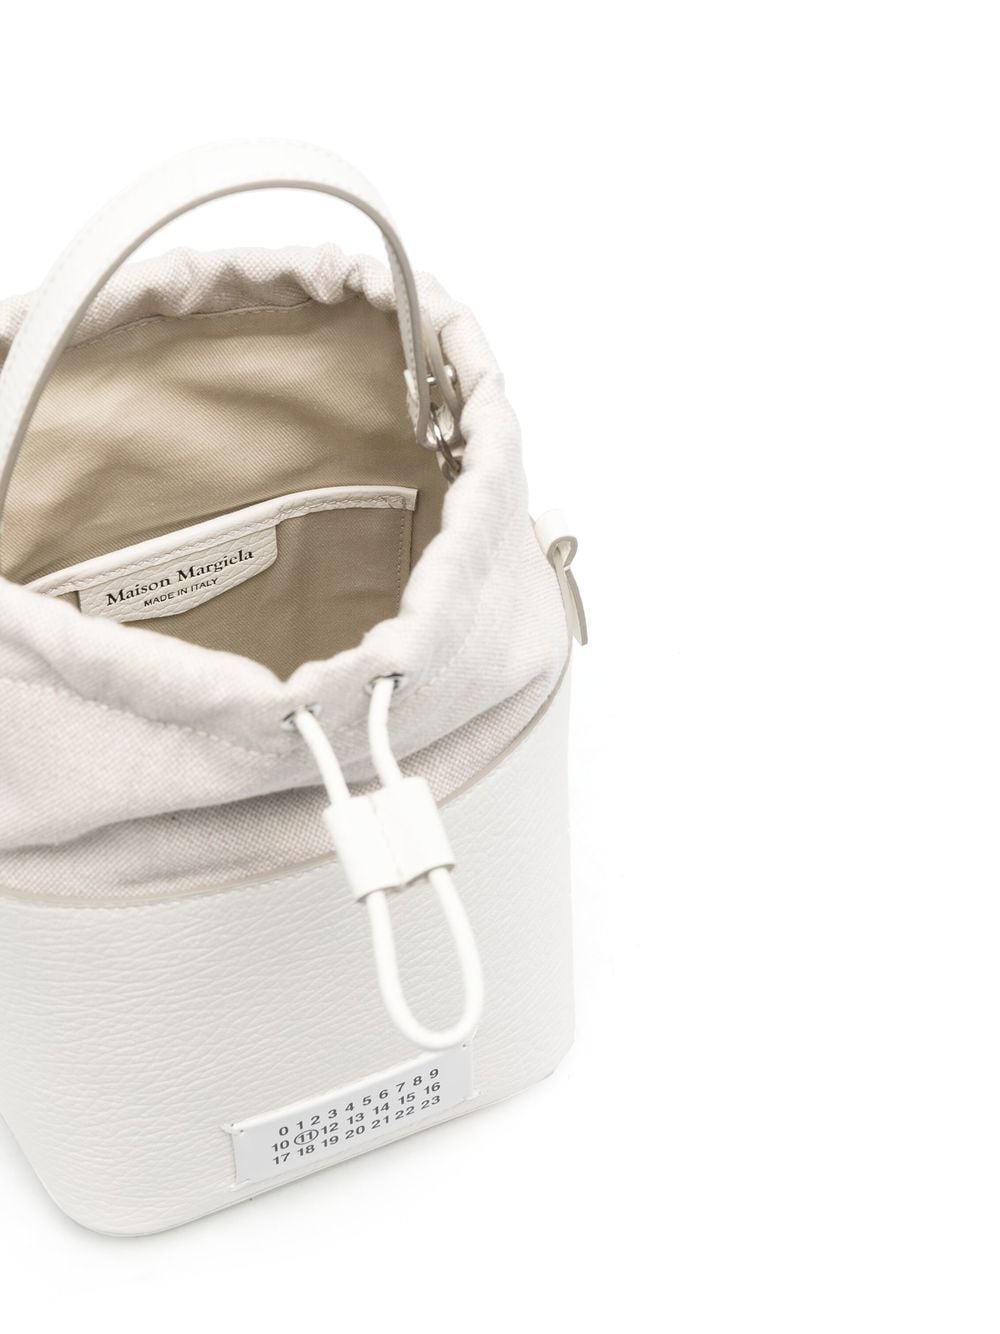 5AC Leather Bucket Handbag by Maison Margiela